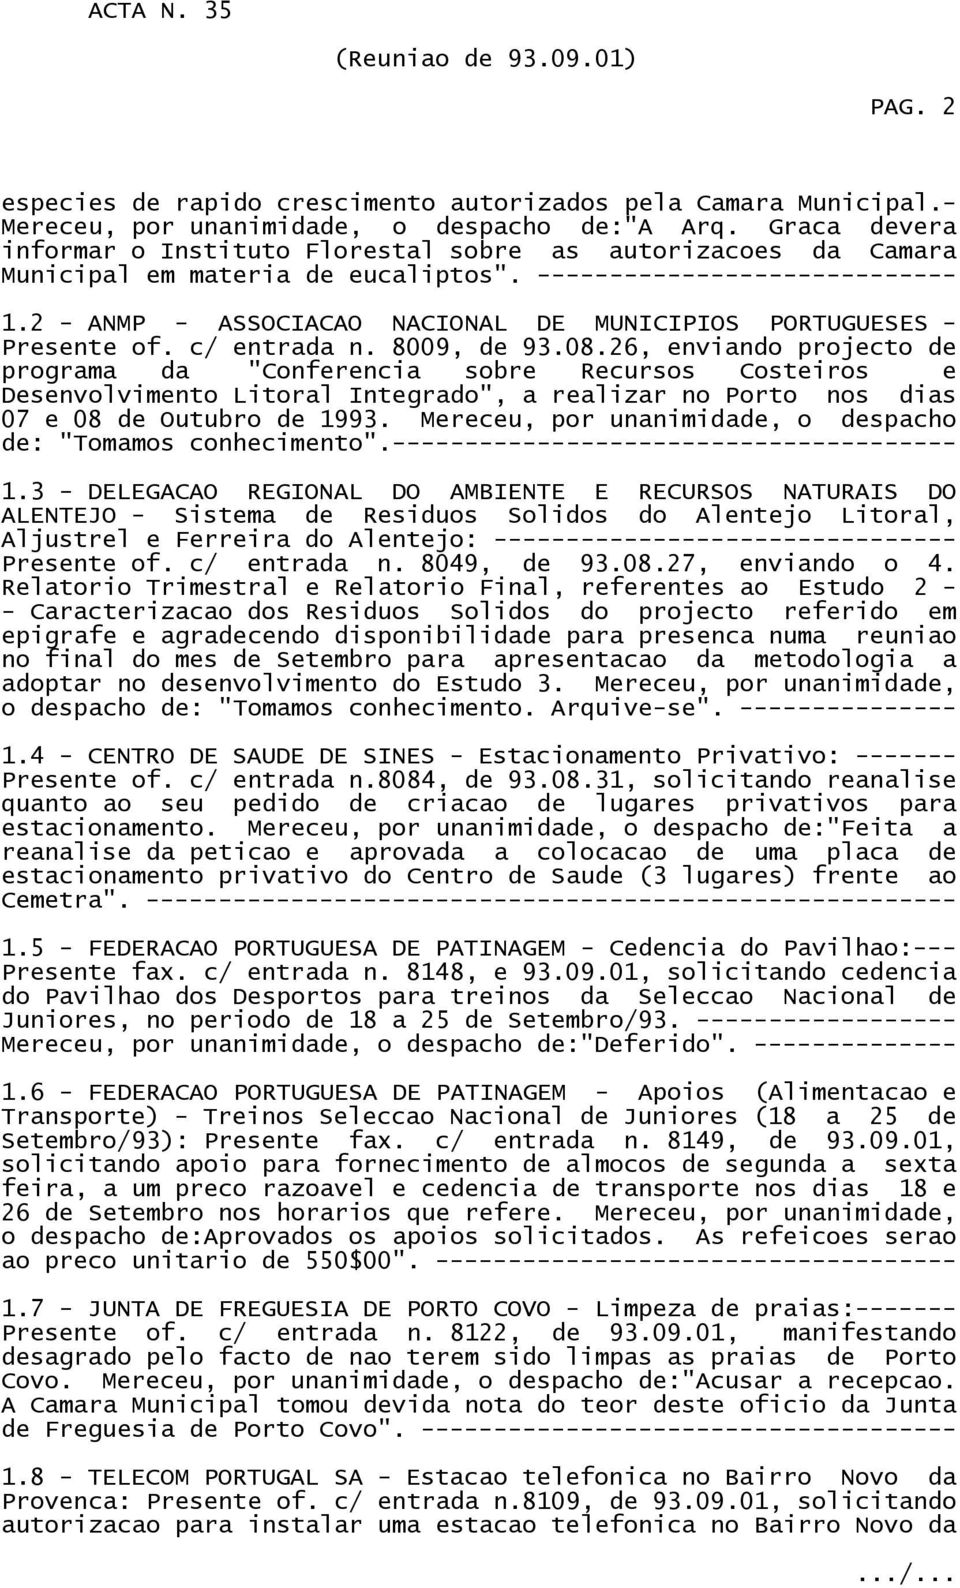 2 - ANMP - ASSOCIACAO NACIONAL DE MUNICIPIOS PORTUGUESES - Presente of. c/ entrada n. 8009, de 93.08.